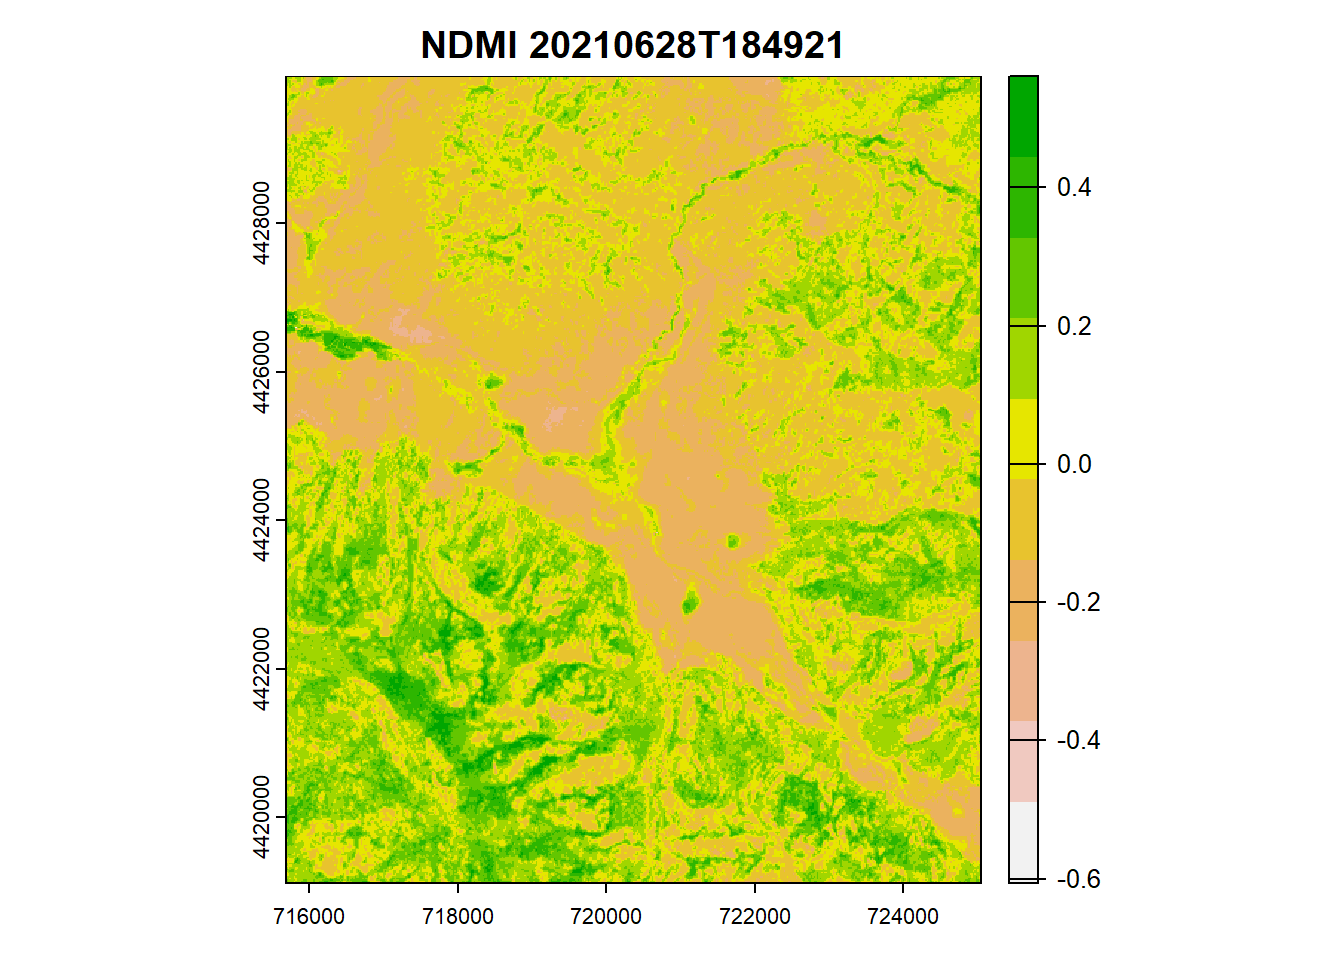 NDMI from Sentinel-2 image, 20210628.